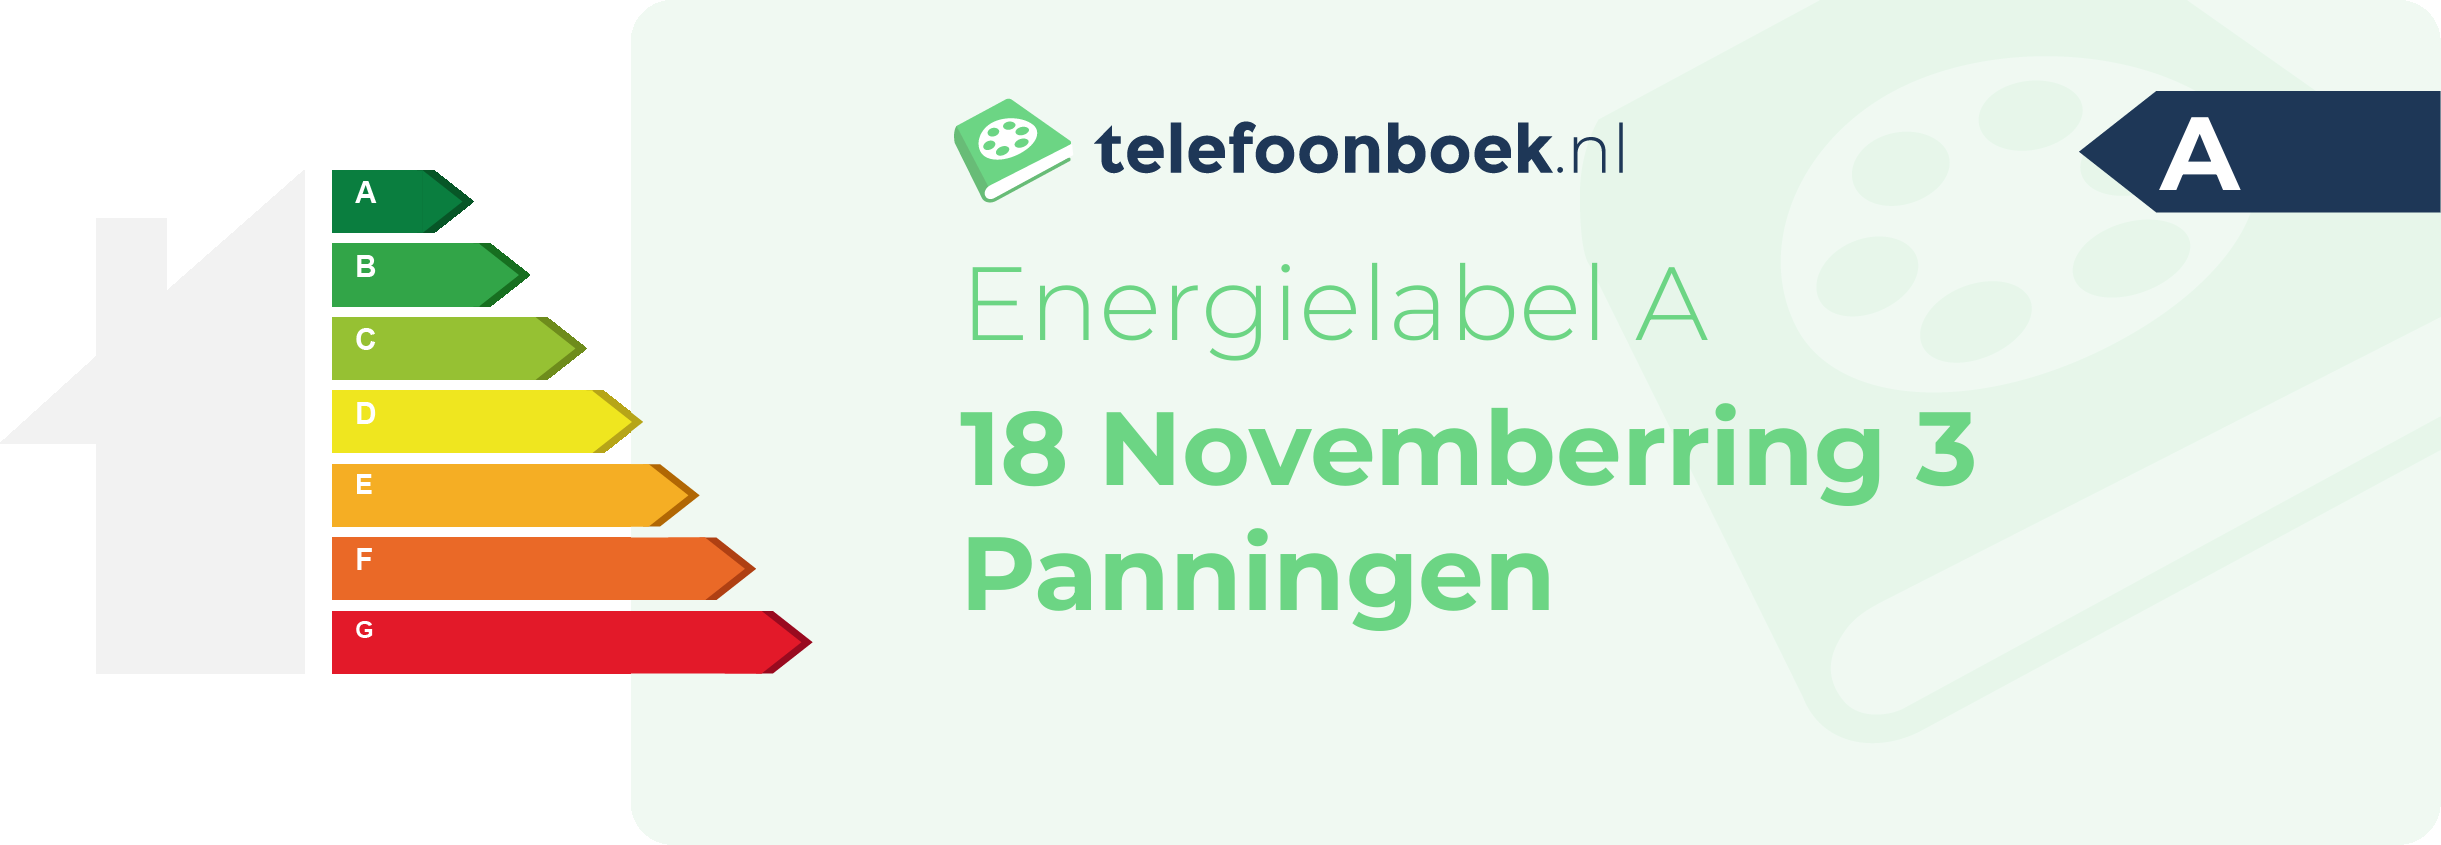 Energielabel 18 Novemberring 3 Panningen